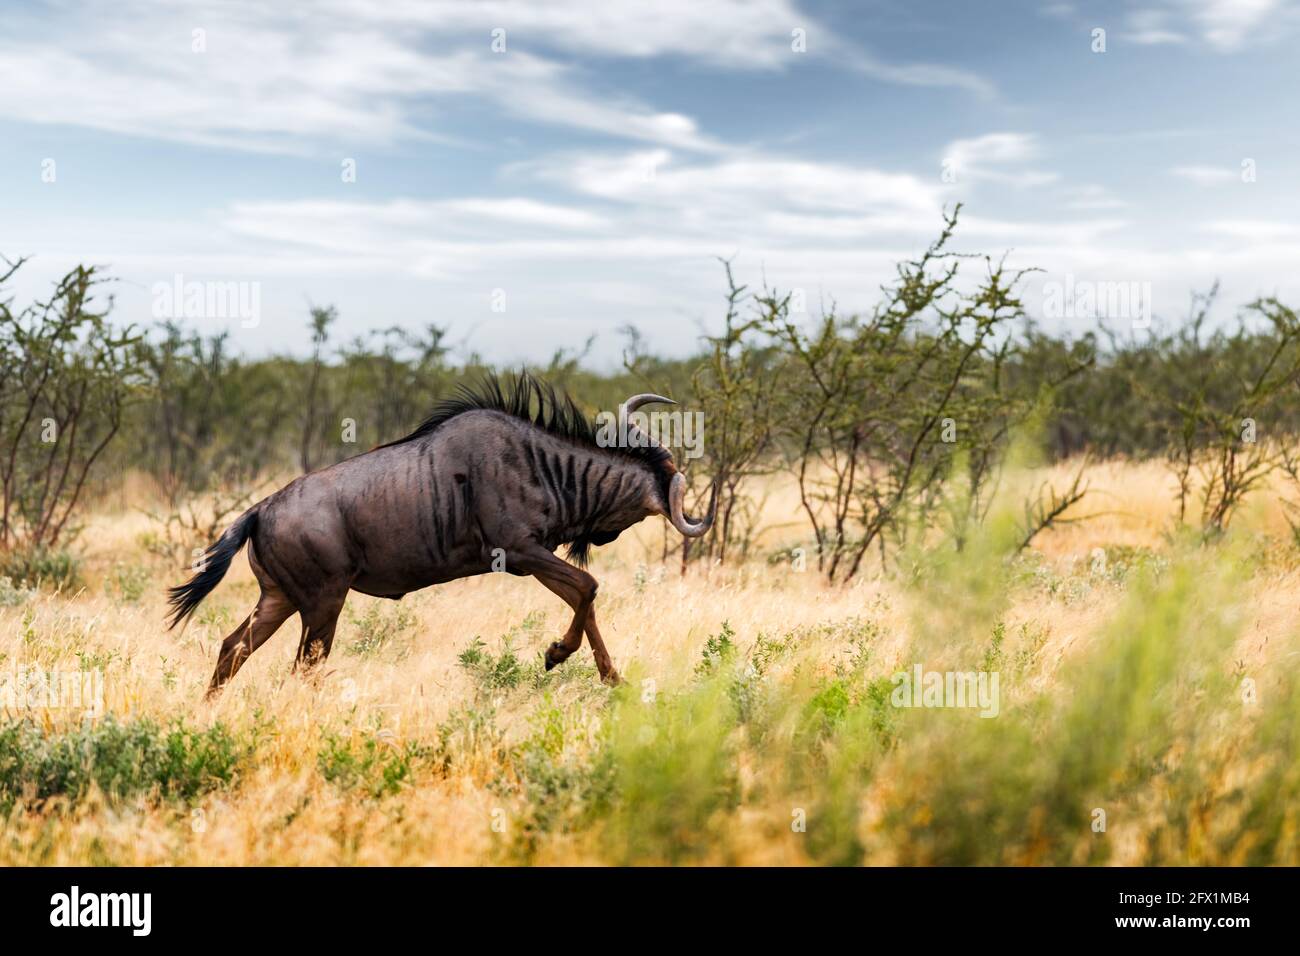 Grande antilope africano GNU (Blue wildebeest, Connochaetes taurinus) che corre in erba secca gialla la sera in savana Namibia. Fotografia di fauna selvatica in Africa Foto Stock